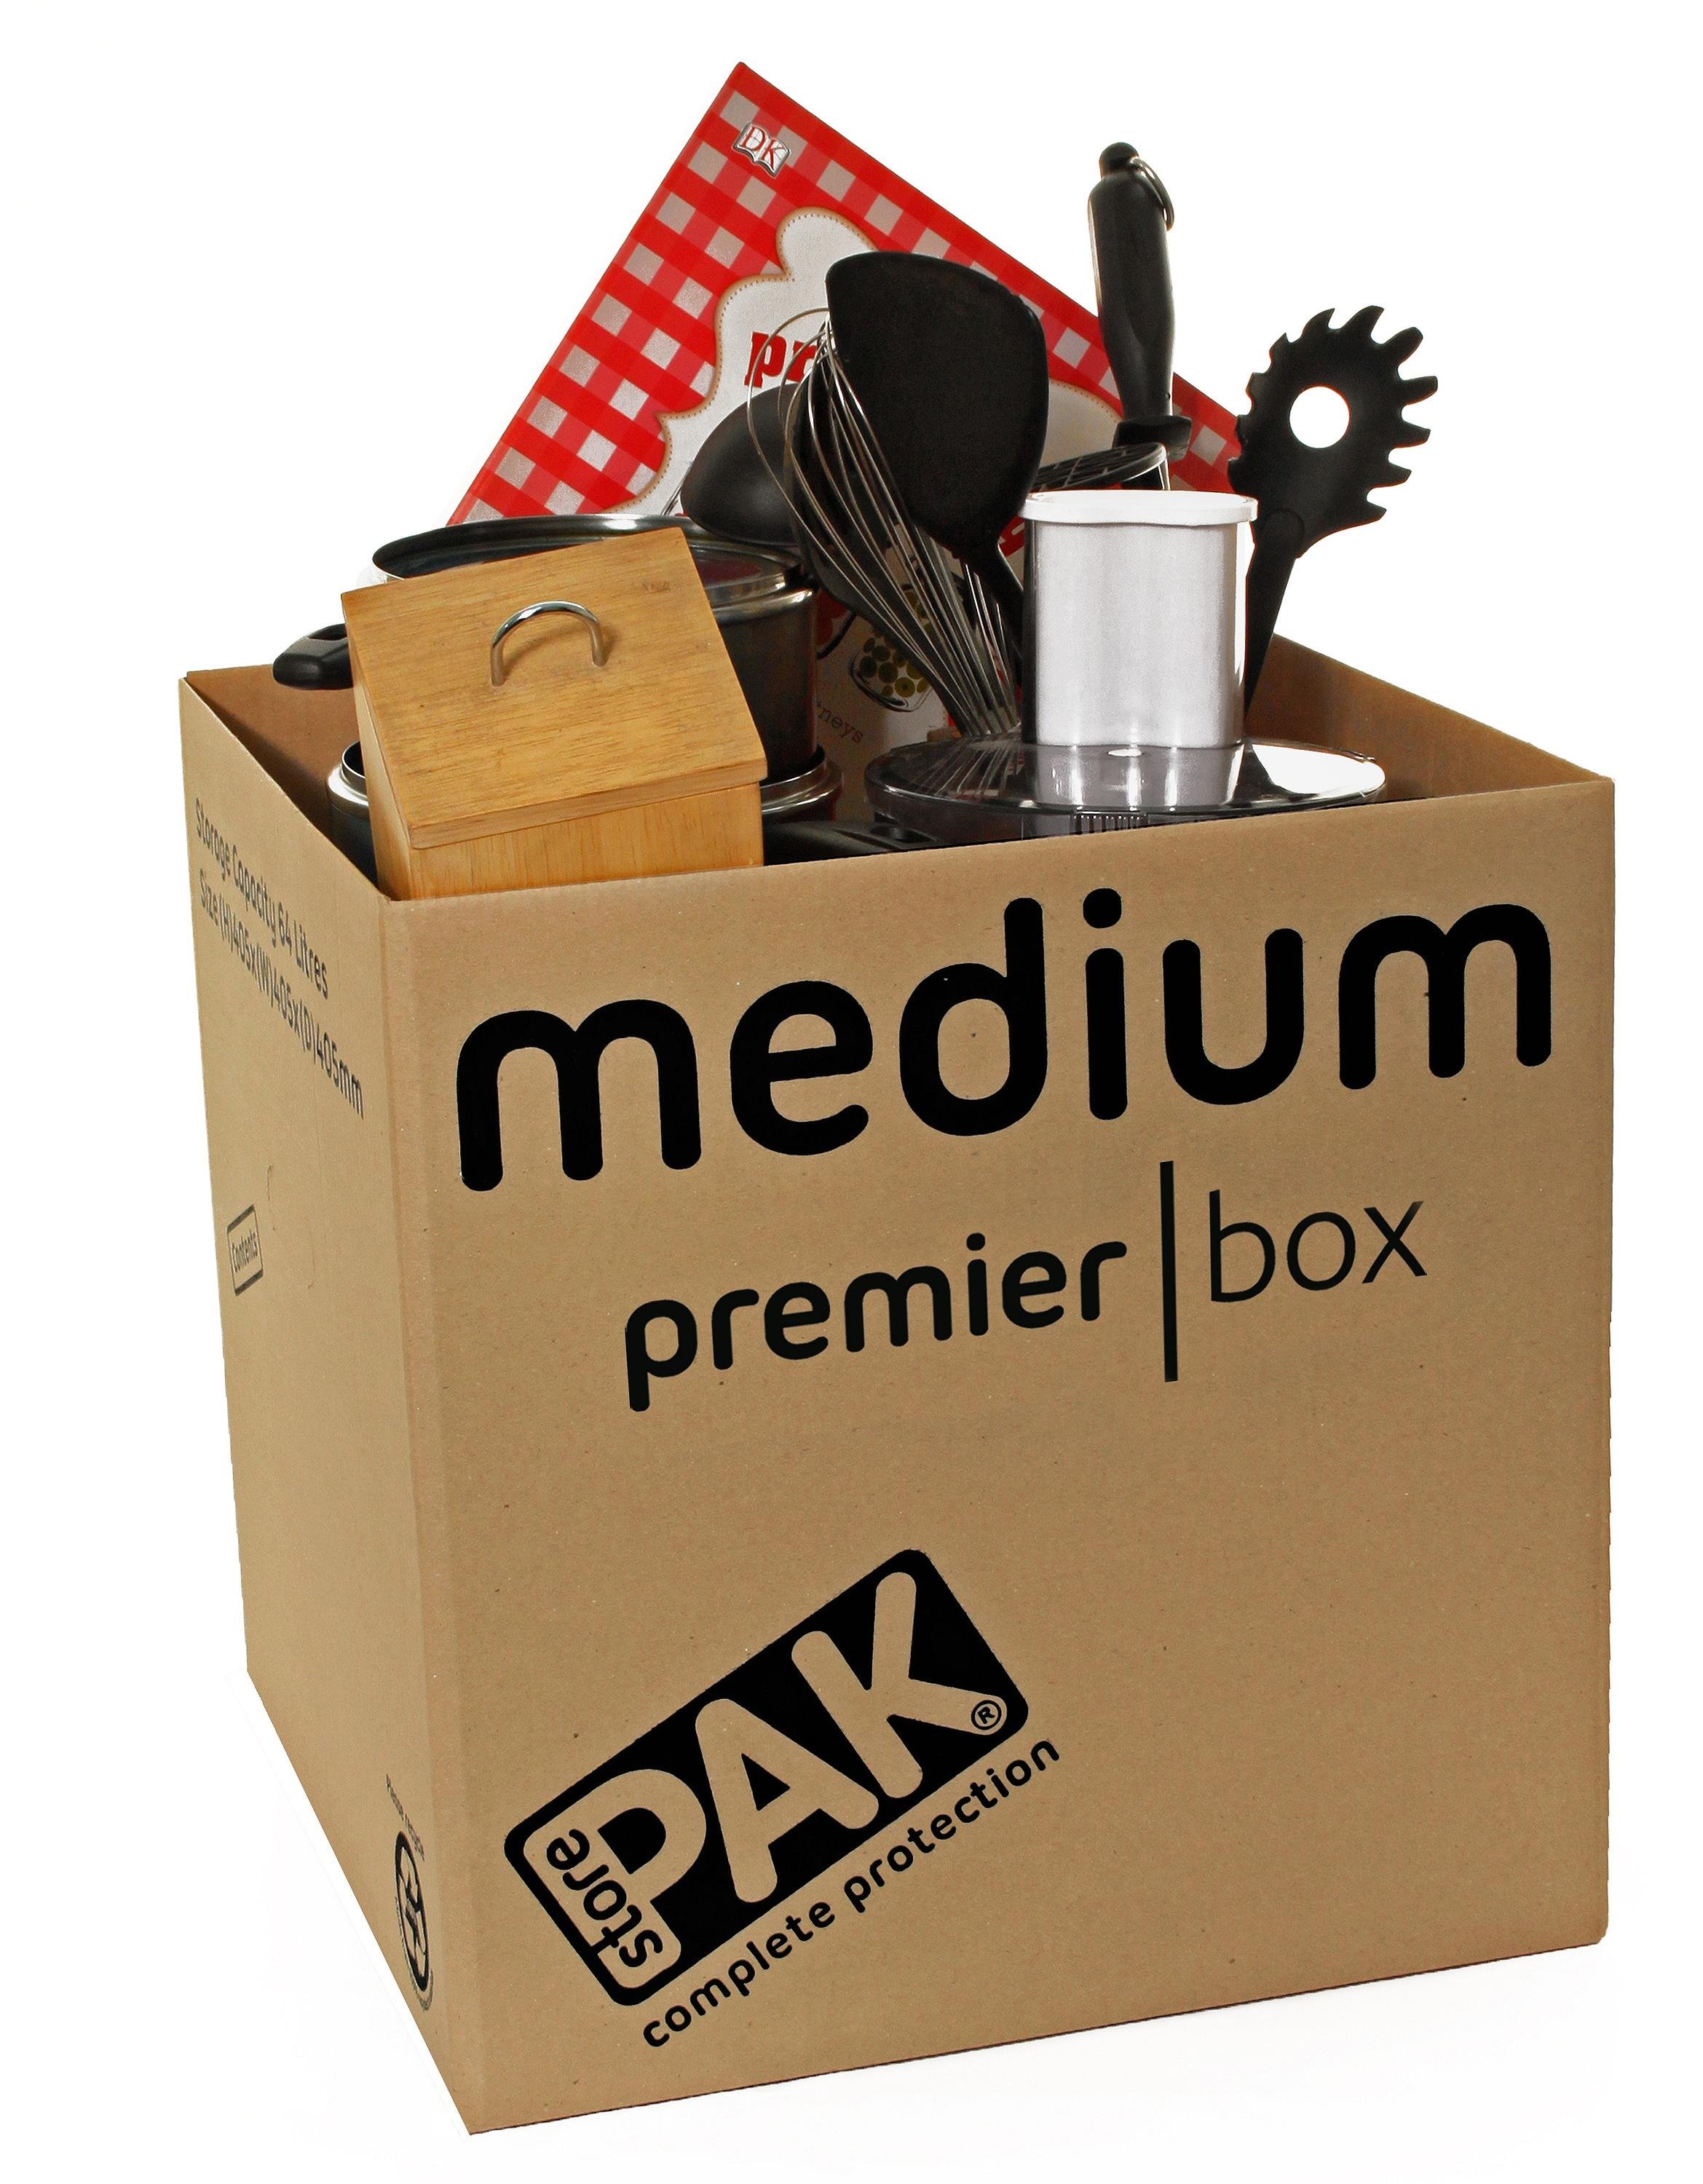 StorePAK Heavy Duty Medium Cardboard Boxes review